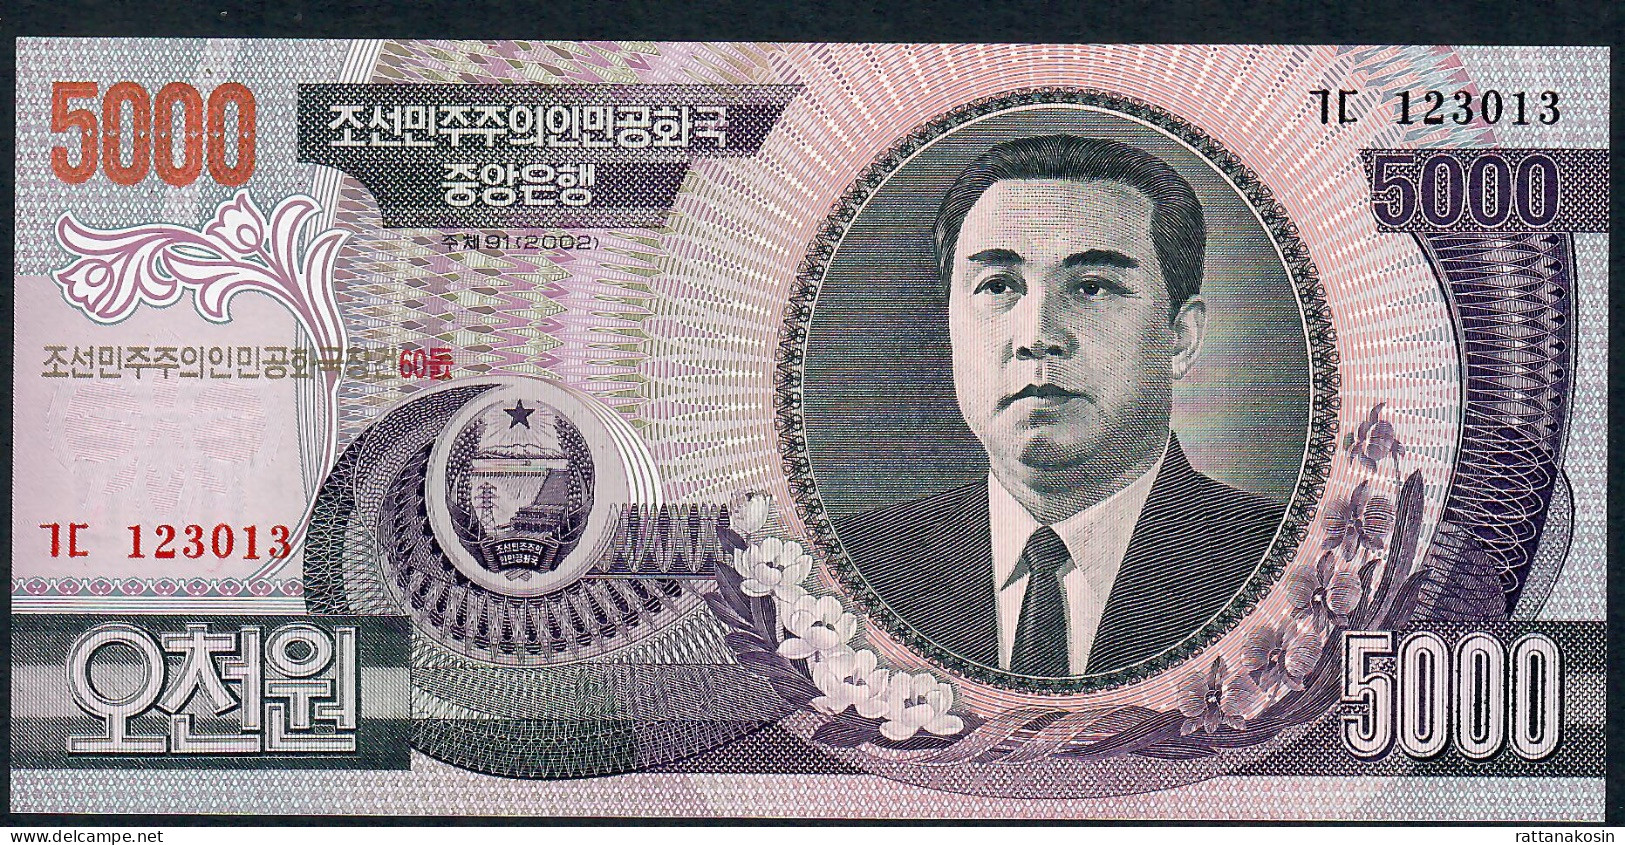 NORTH KOREA VERY RARE NLP (=B326) 5000 WON Dated 2002 Issued 2005 "60TH ANNIVERSARY LIBERATION" OVPRT On B321 (P46) UNC. - Korea, North